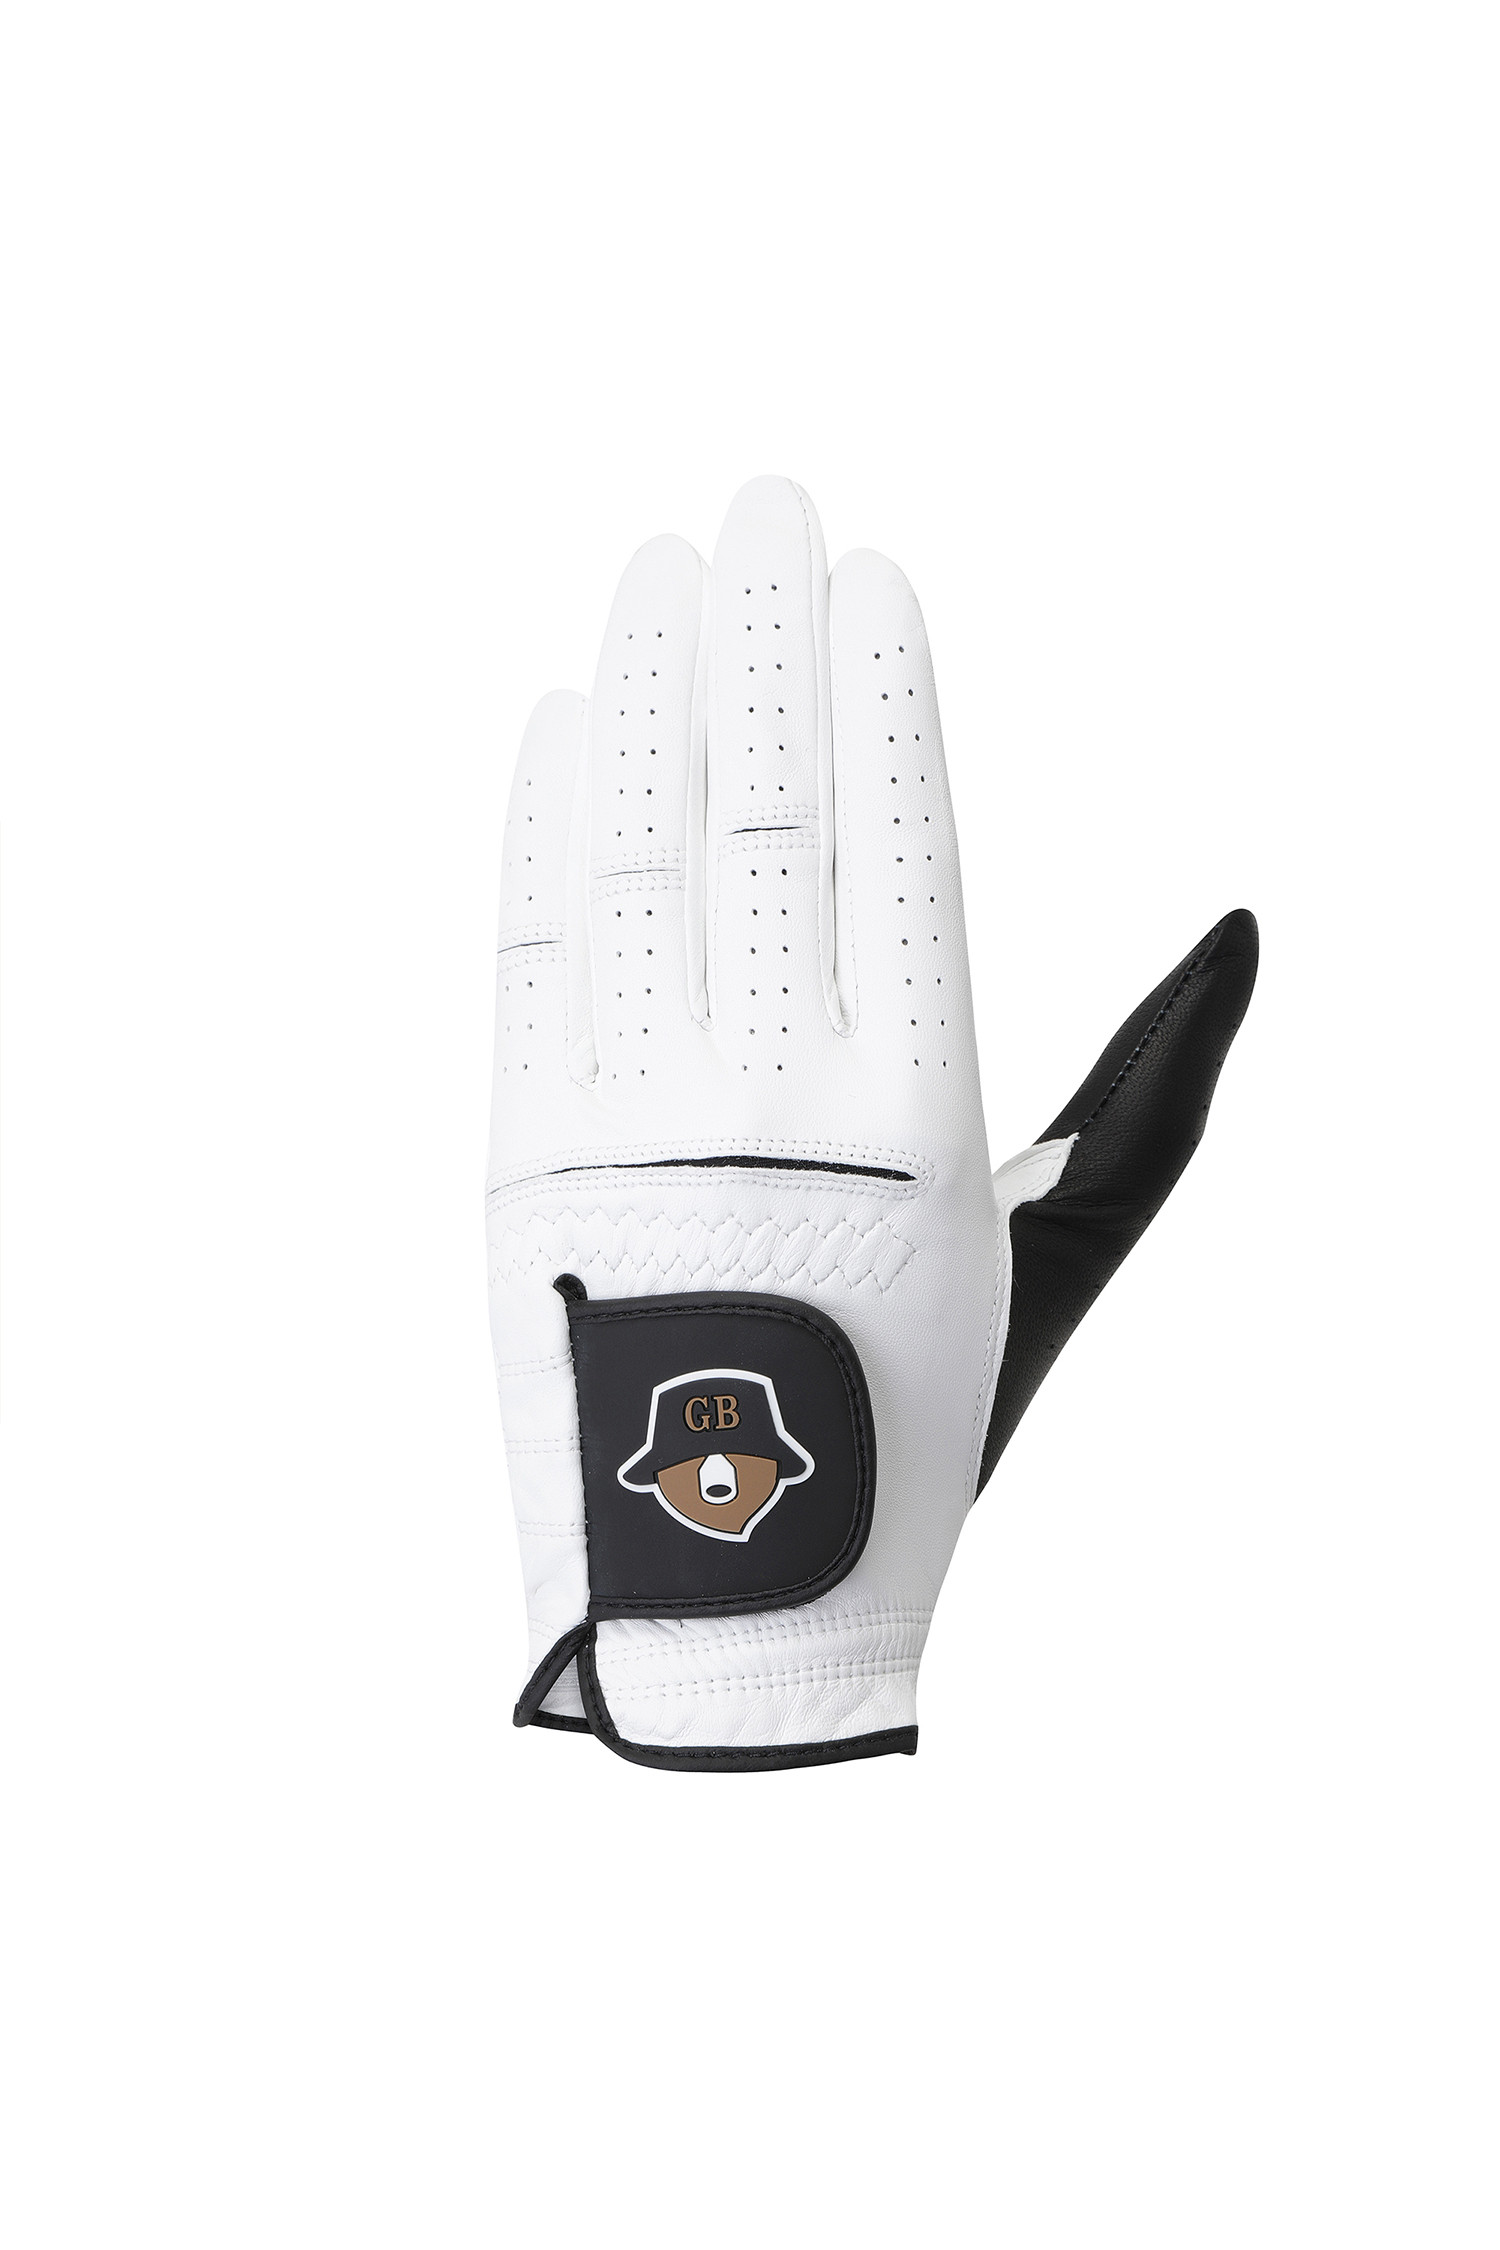 Jack Nicklaus 共用 スポーツ用品 ゴルフ Golden Bear CABRETTA LEATHER Golf Glove Pick  Size 【62%OFF!】